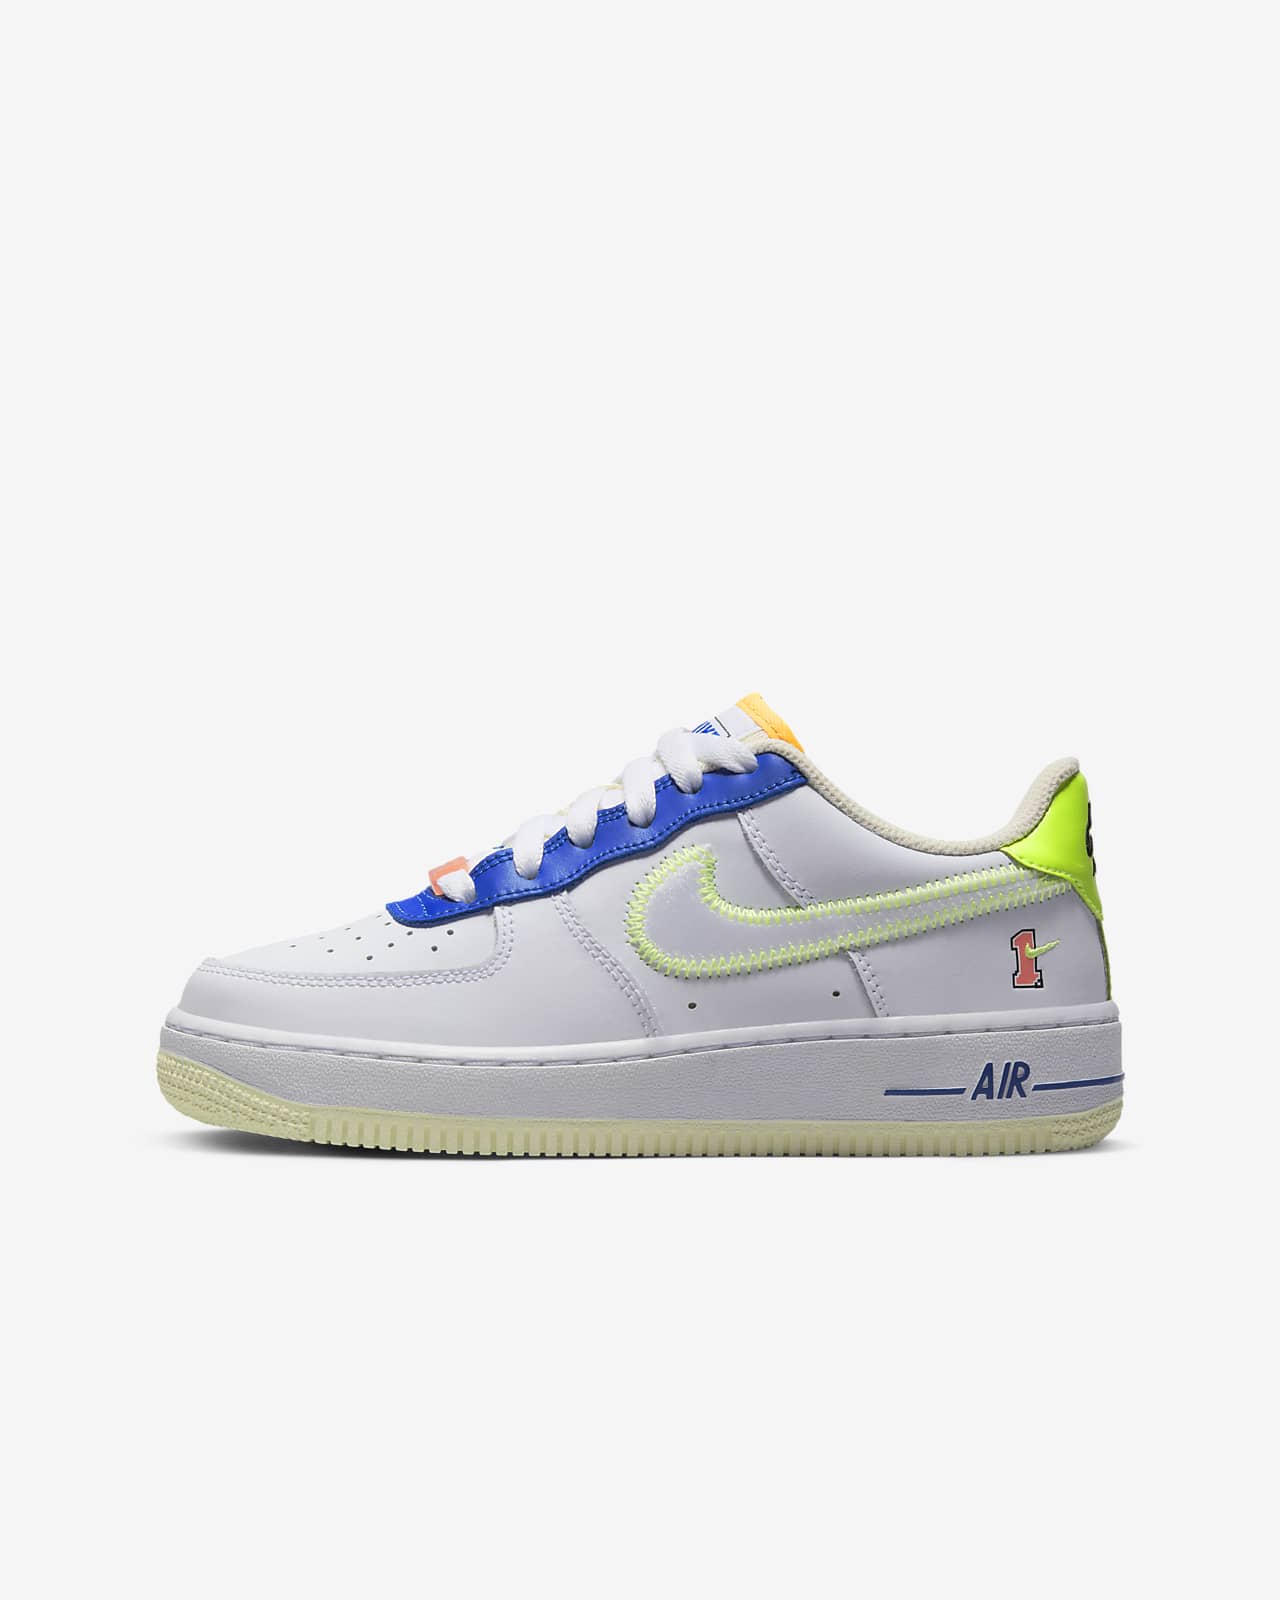 Nike Air Force 1 LV8 Schuhe für ältere Kinder